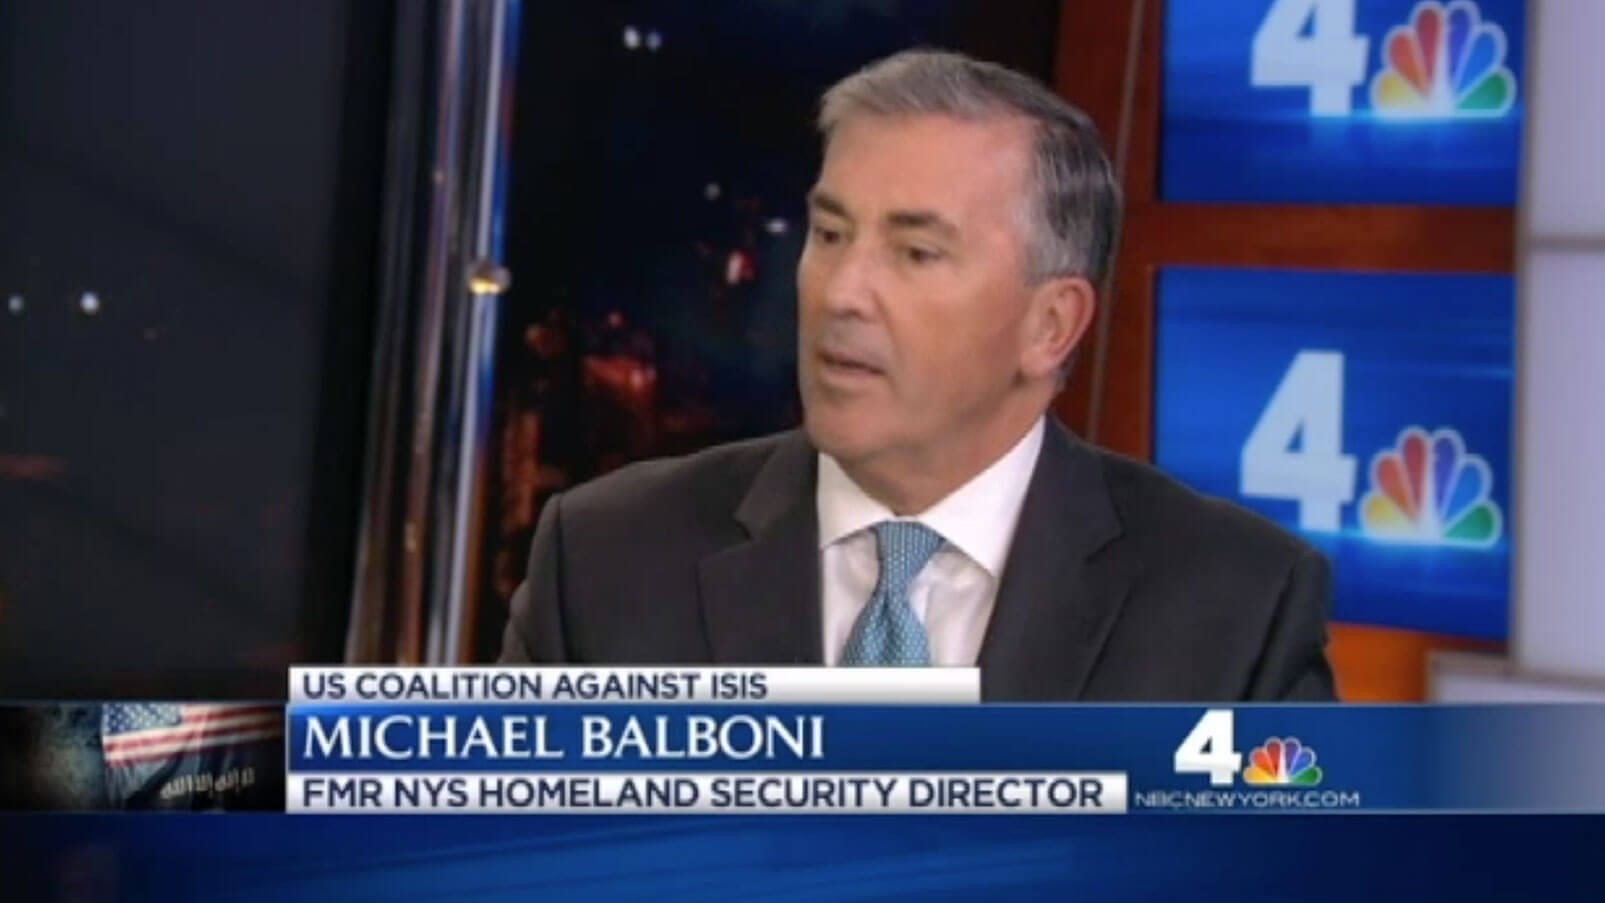 Michael Balboni on ISIS Threats (NBC4NY)